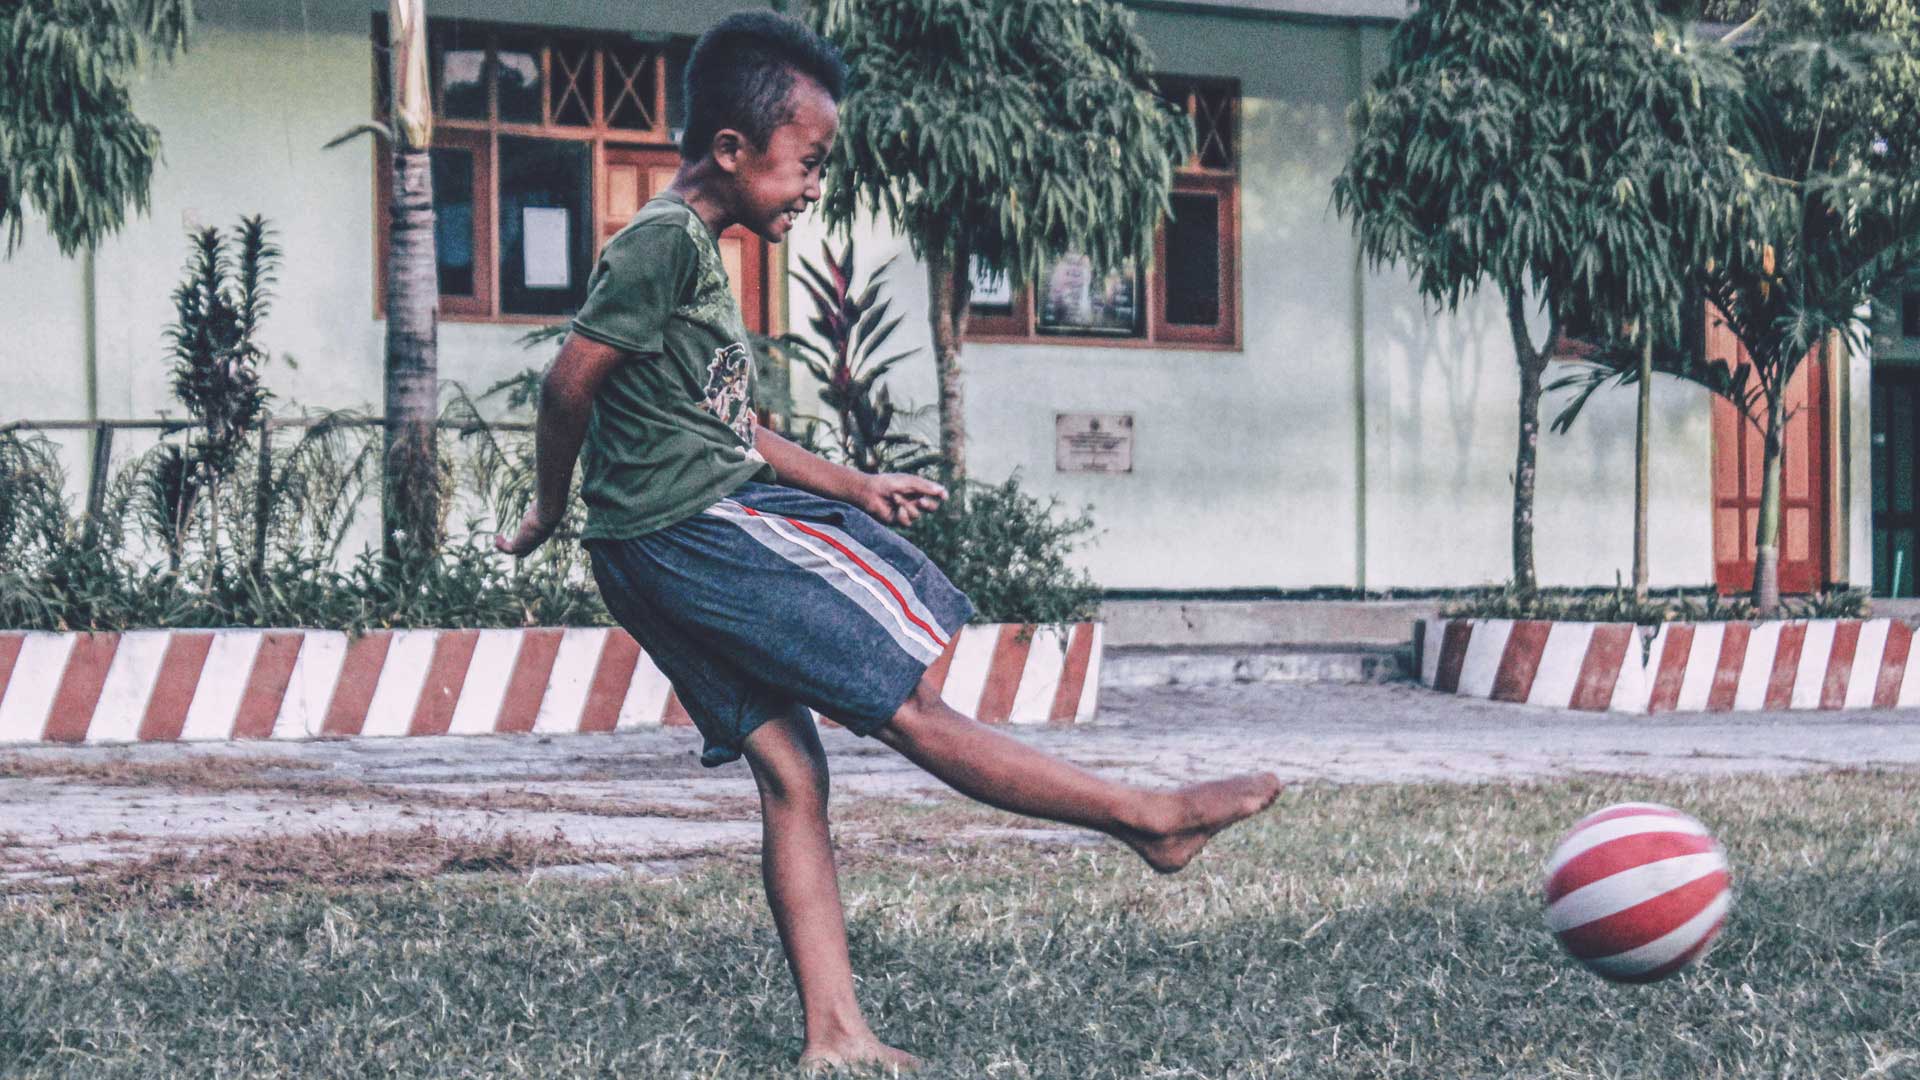 Indonesia street soccer